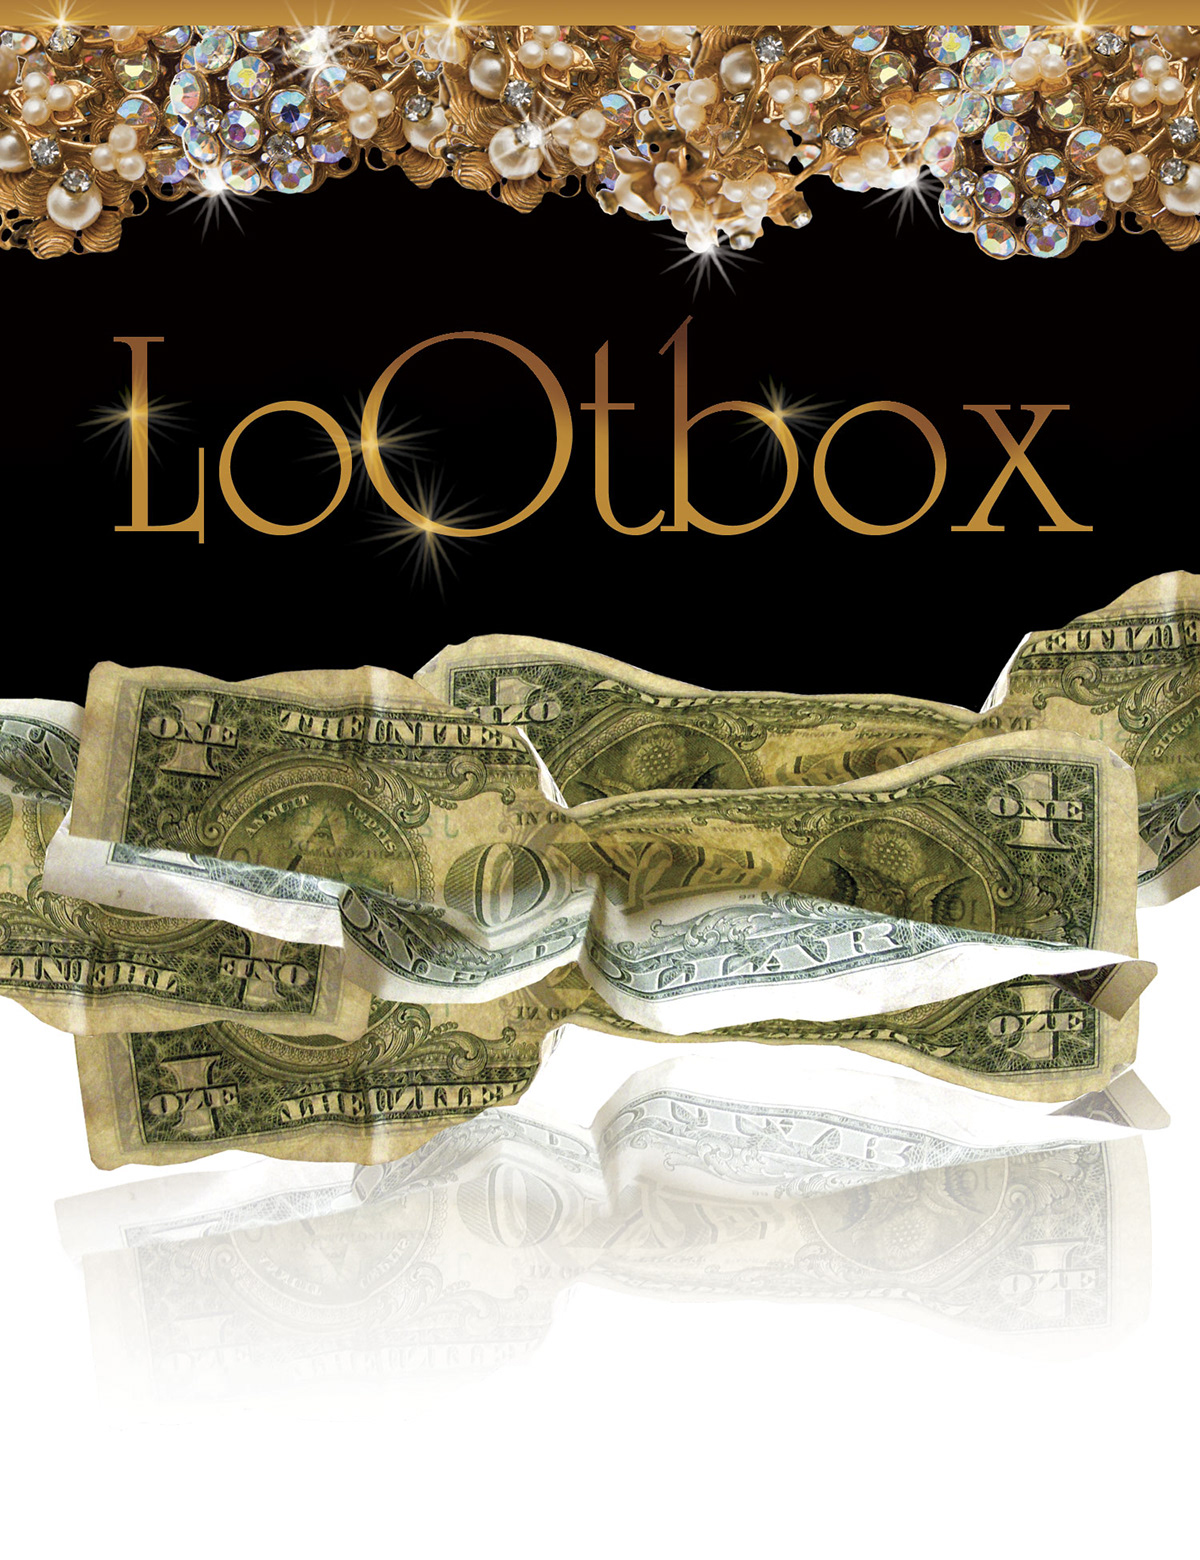 $1 Bills Loot decoupage Breadbox dollars money jewelry vintage jewelry